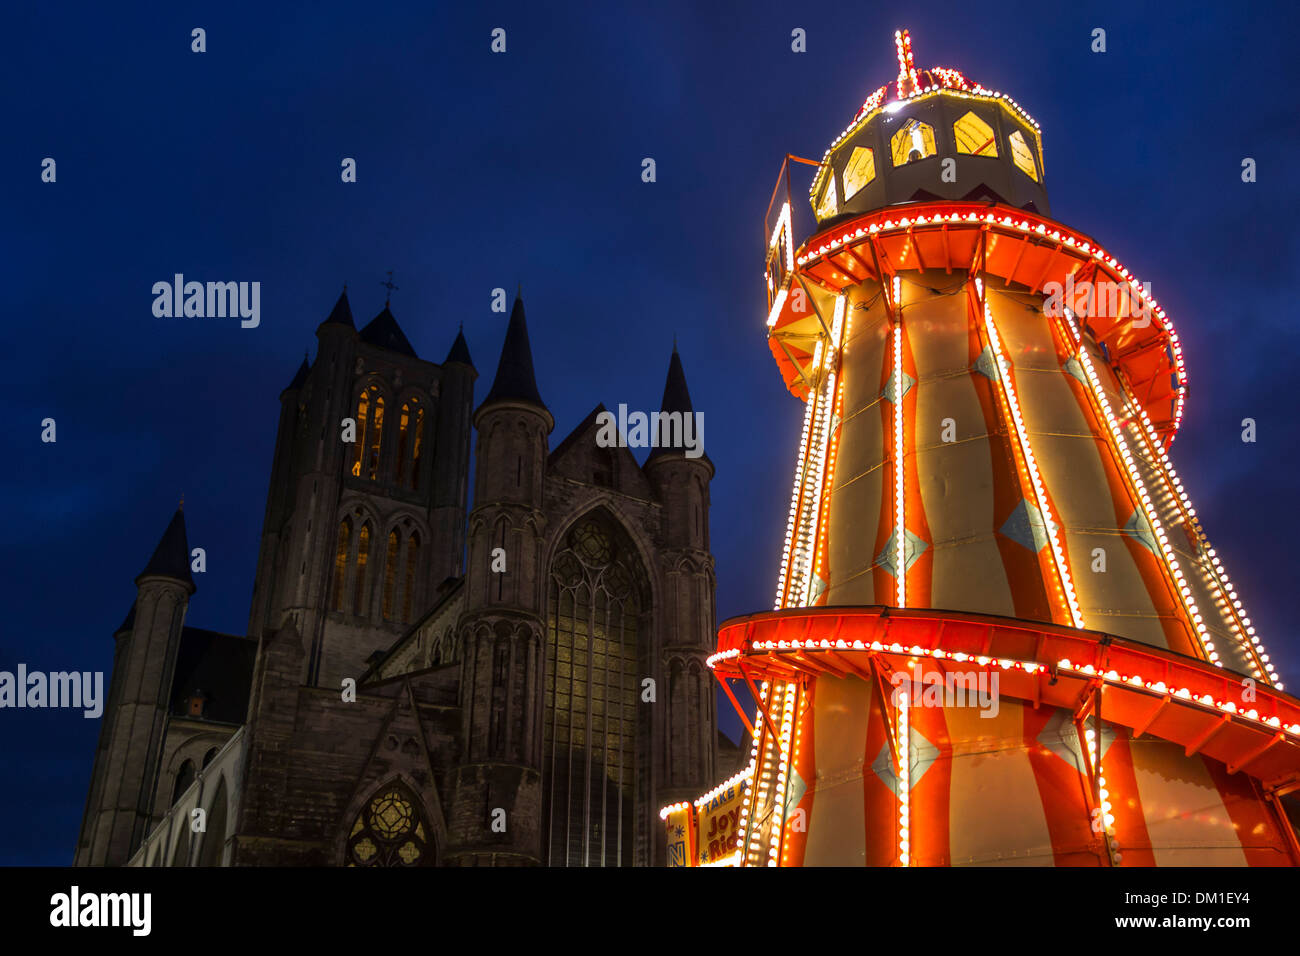 Illuminated helter skelter at evening Christmas market and Saint Nicholas church in winter, Korenmarkt, Ghent, Belgium Stock Photo